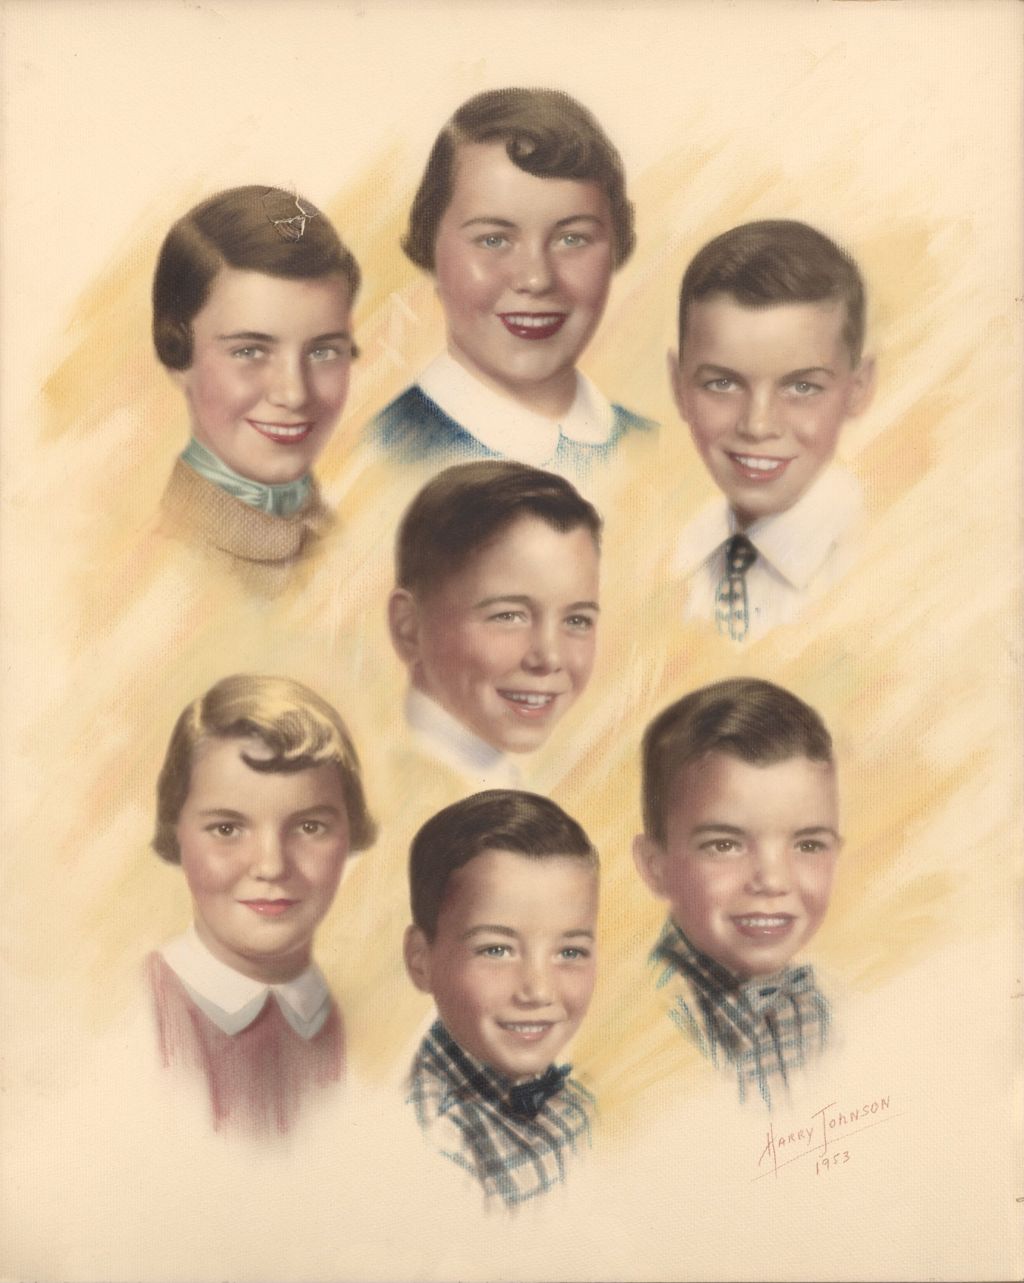 Miniature of Richard J. Daley's children